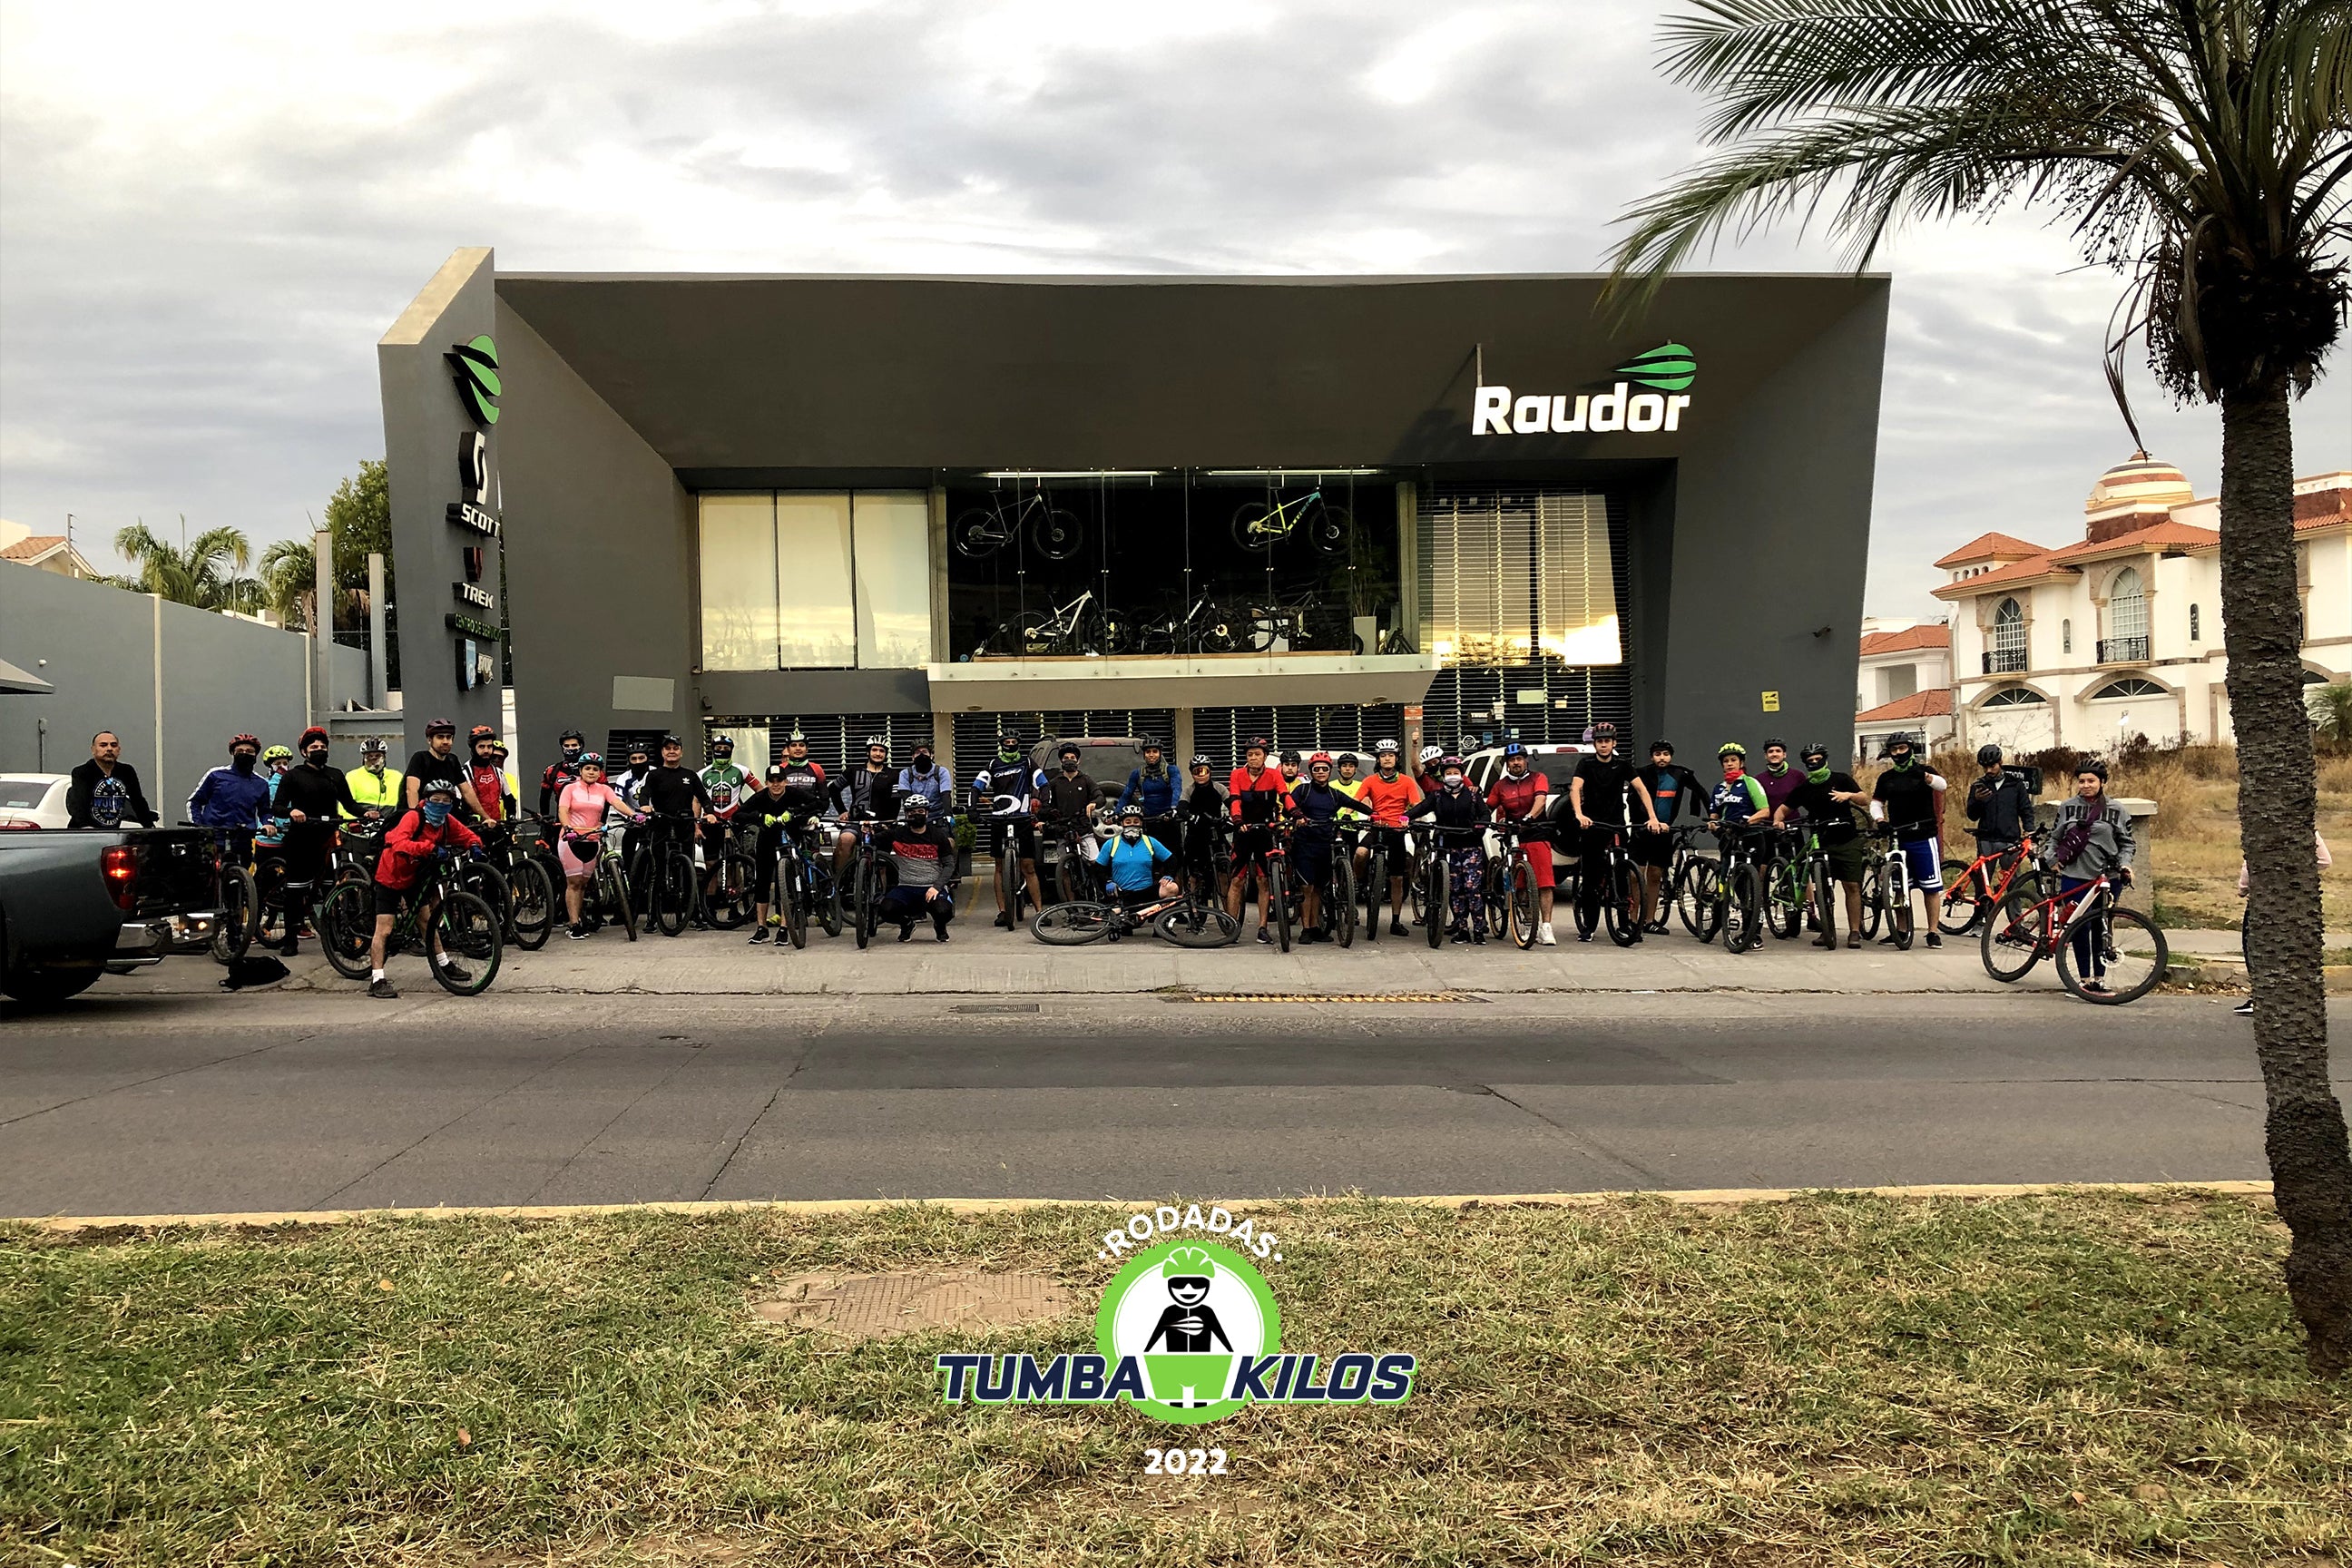 Rodada Tumbakilos Culiacán Sinaloa - Tienda de bicicletas Raudor - La mejor tienda de bicicletas 